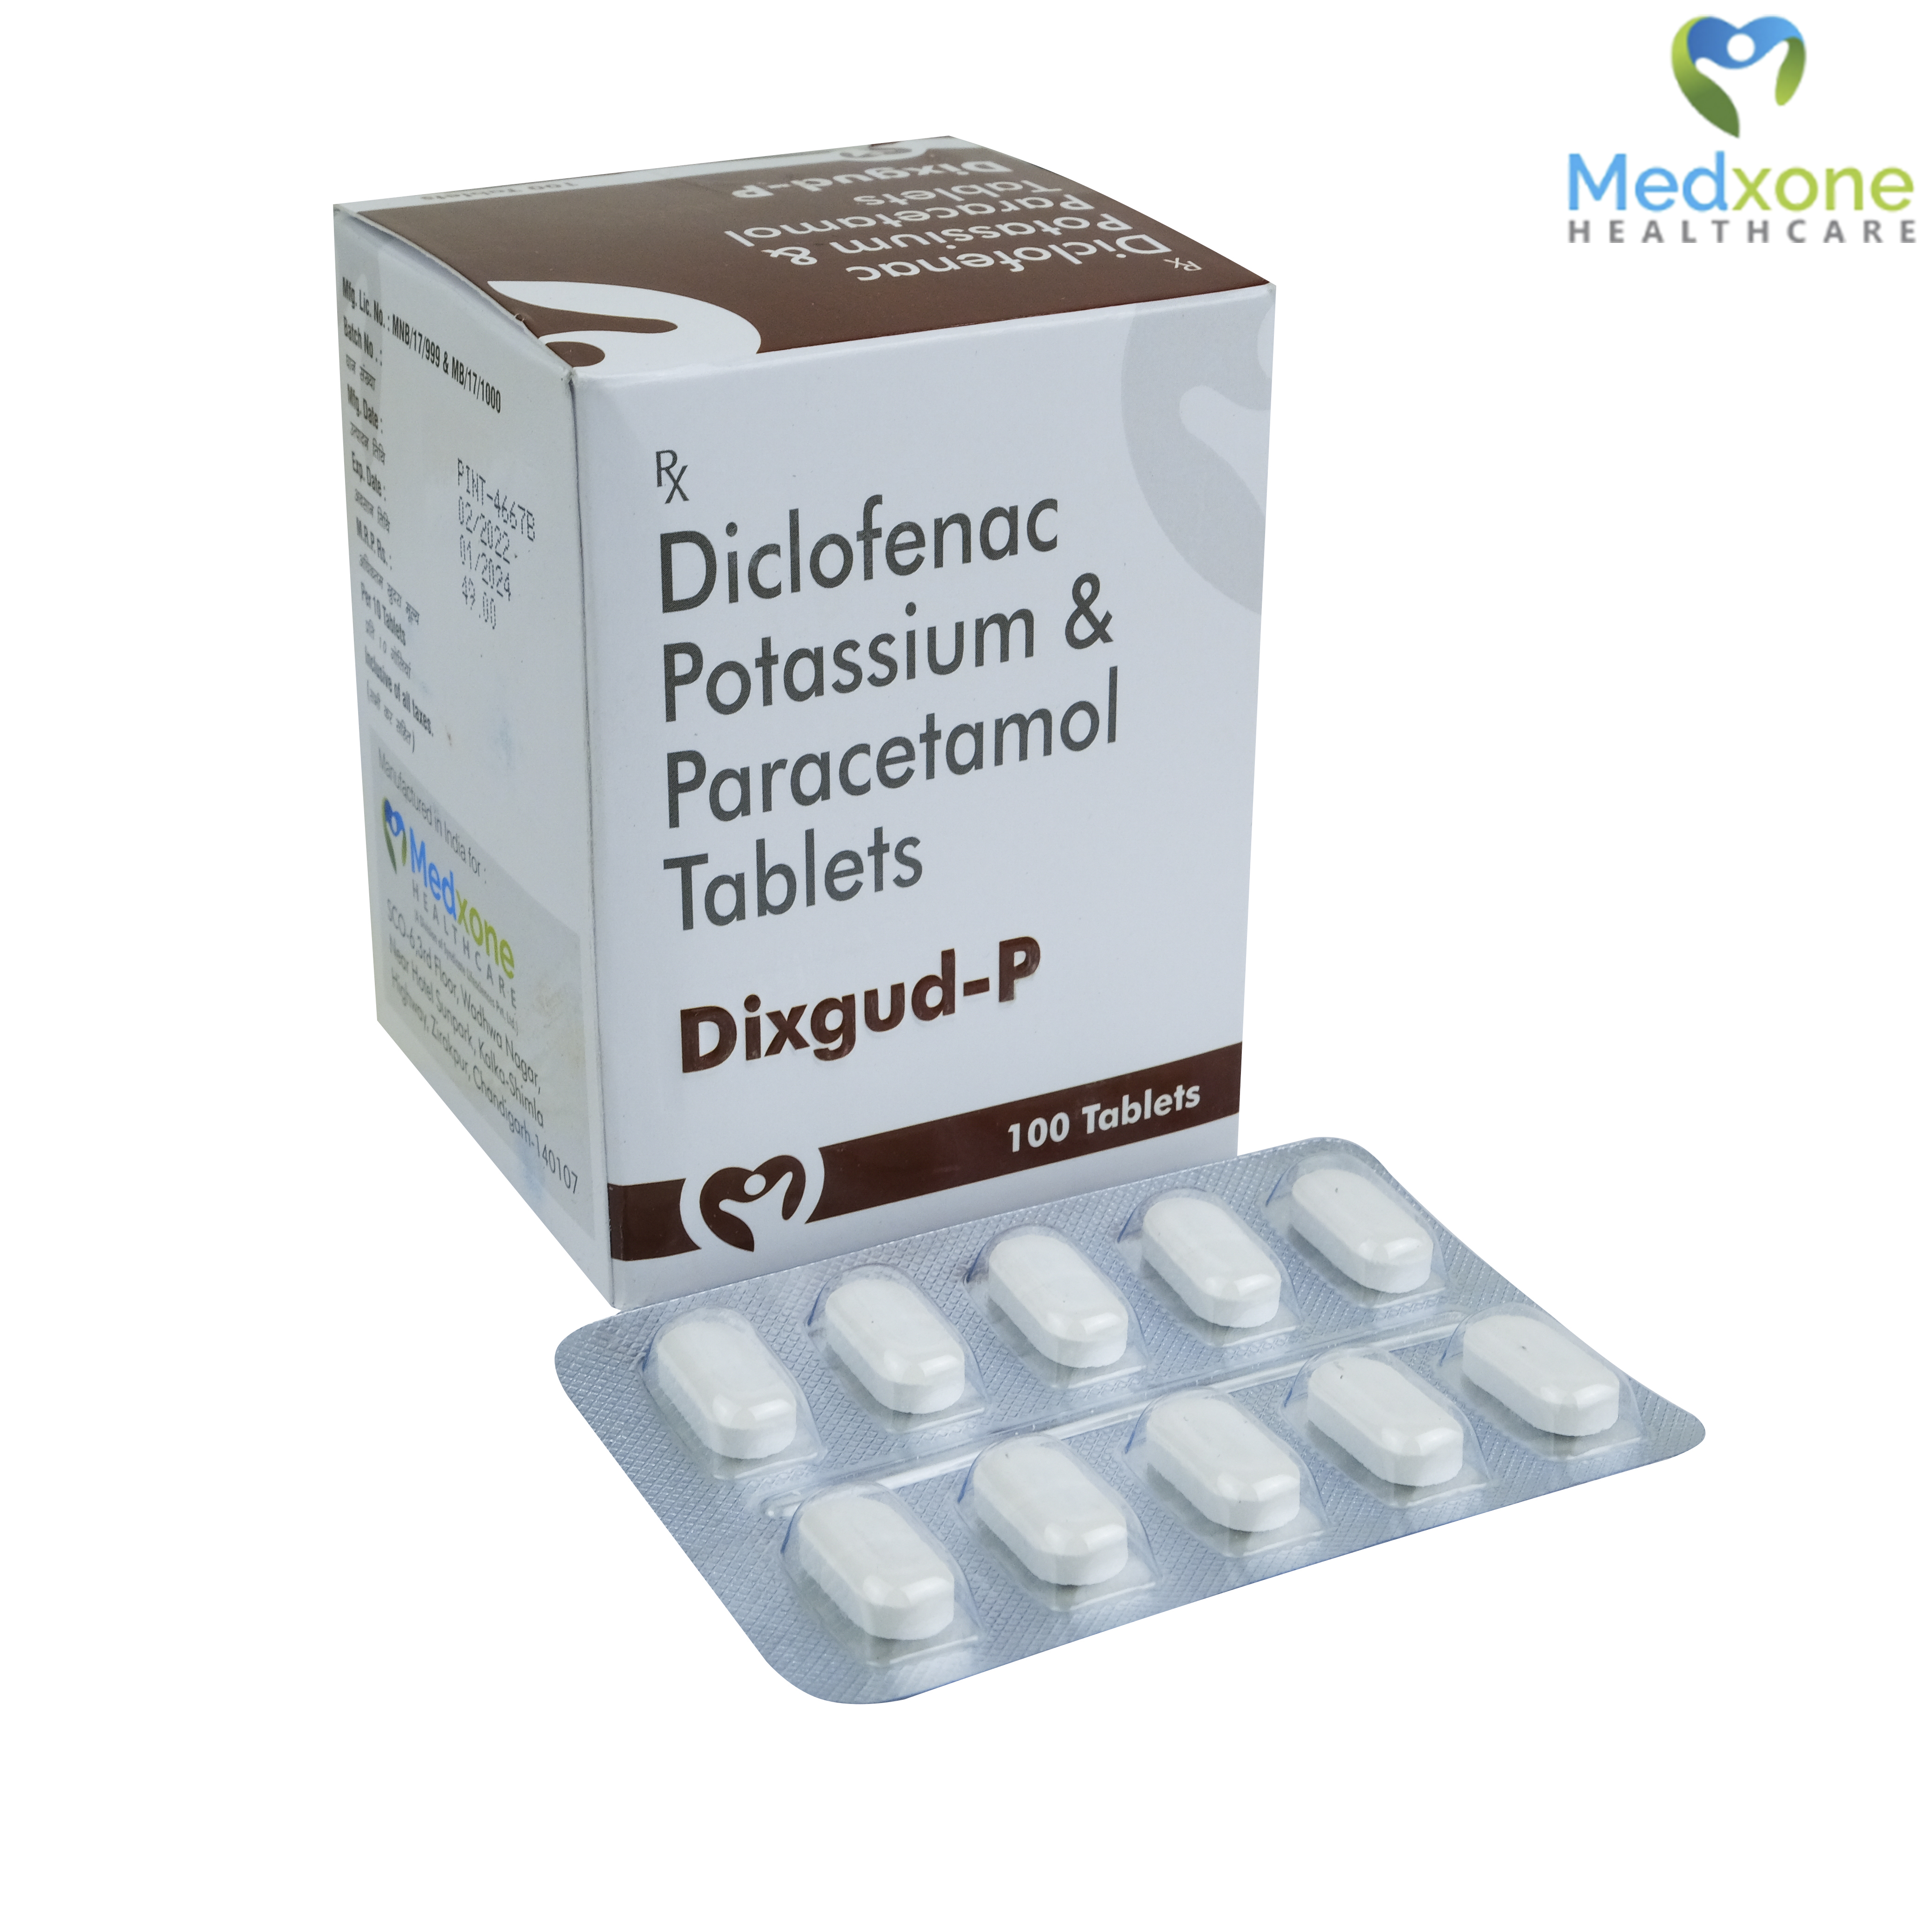 Diclofenac Potassium 50mg +Paracetamol 325mg